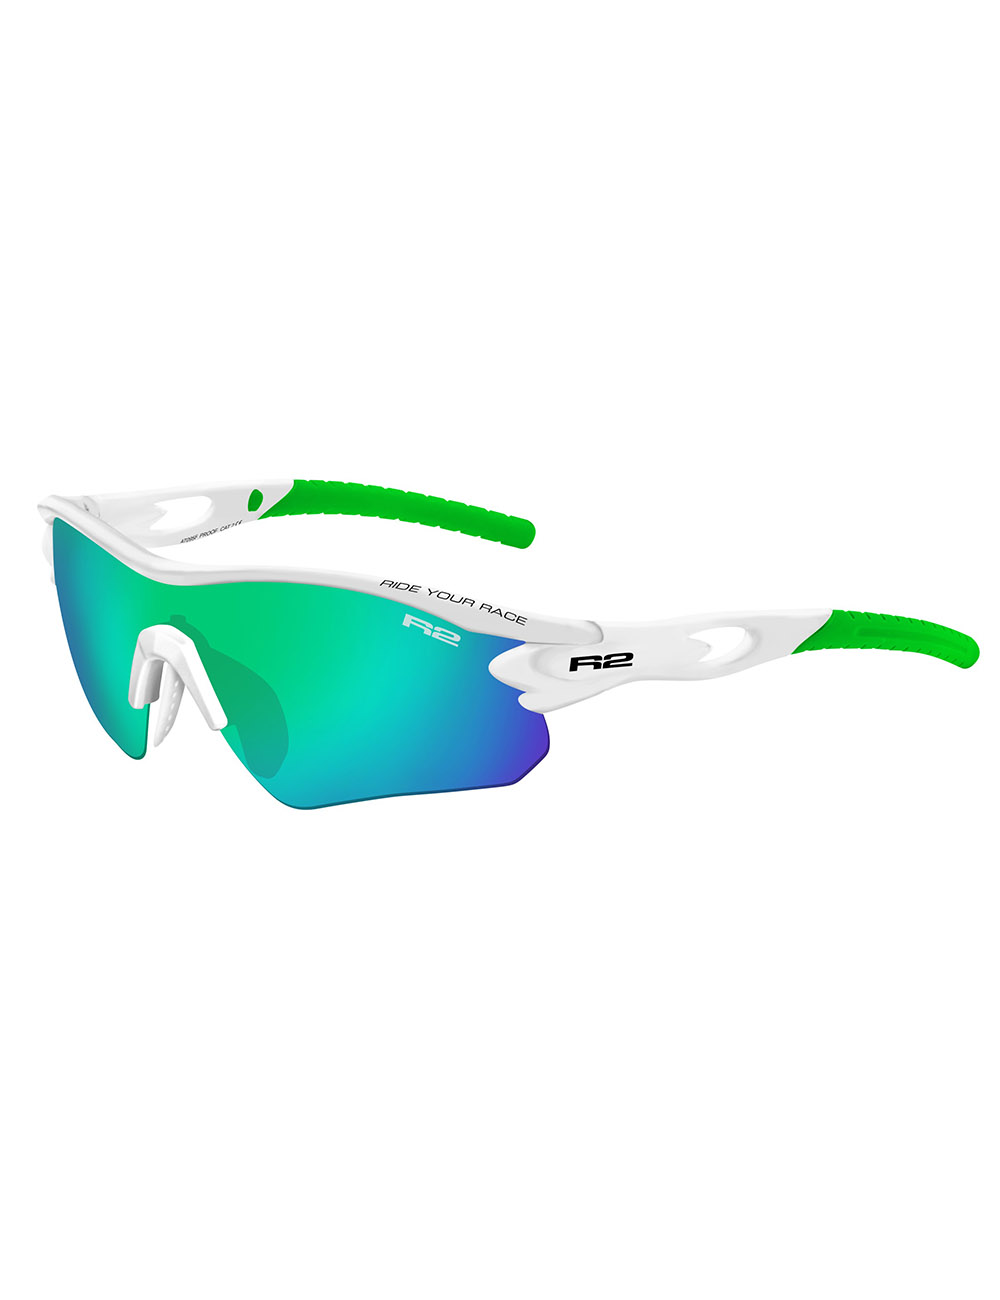 R2 Спортивные очки PROOF White / Green Артикул: AT095F